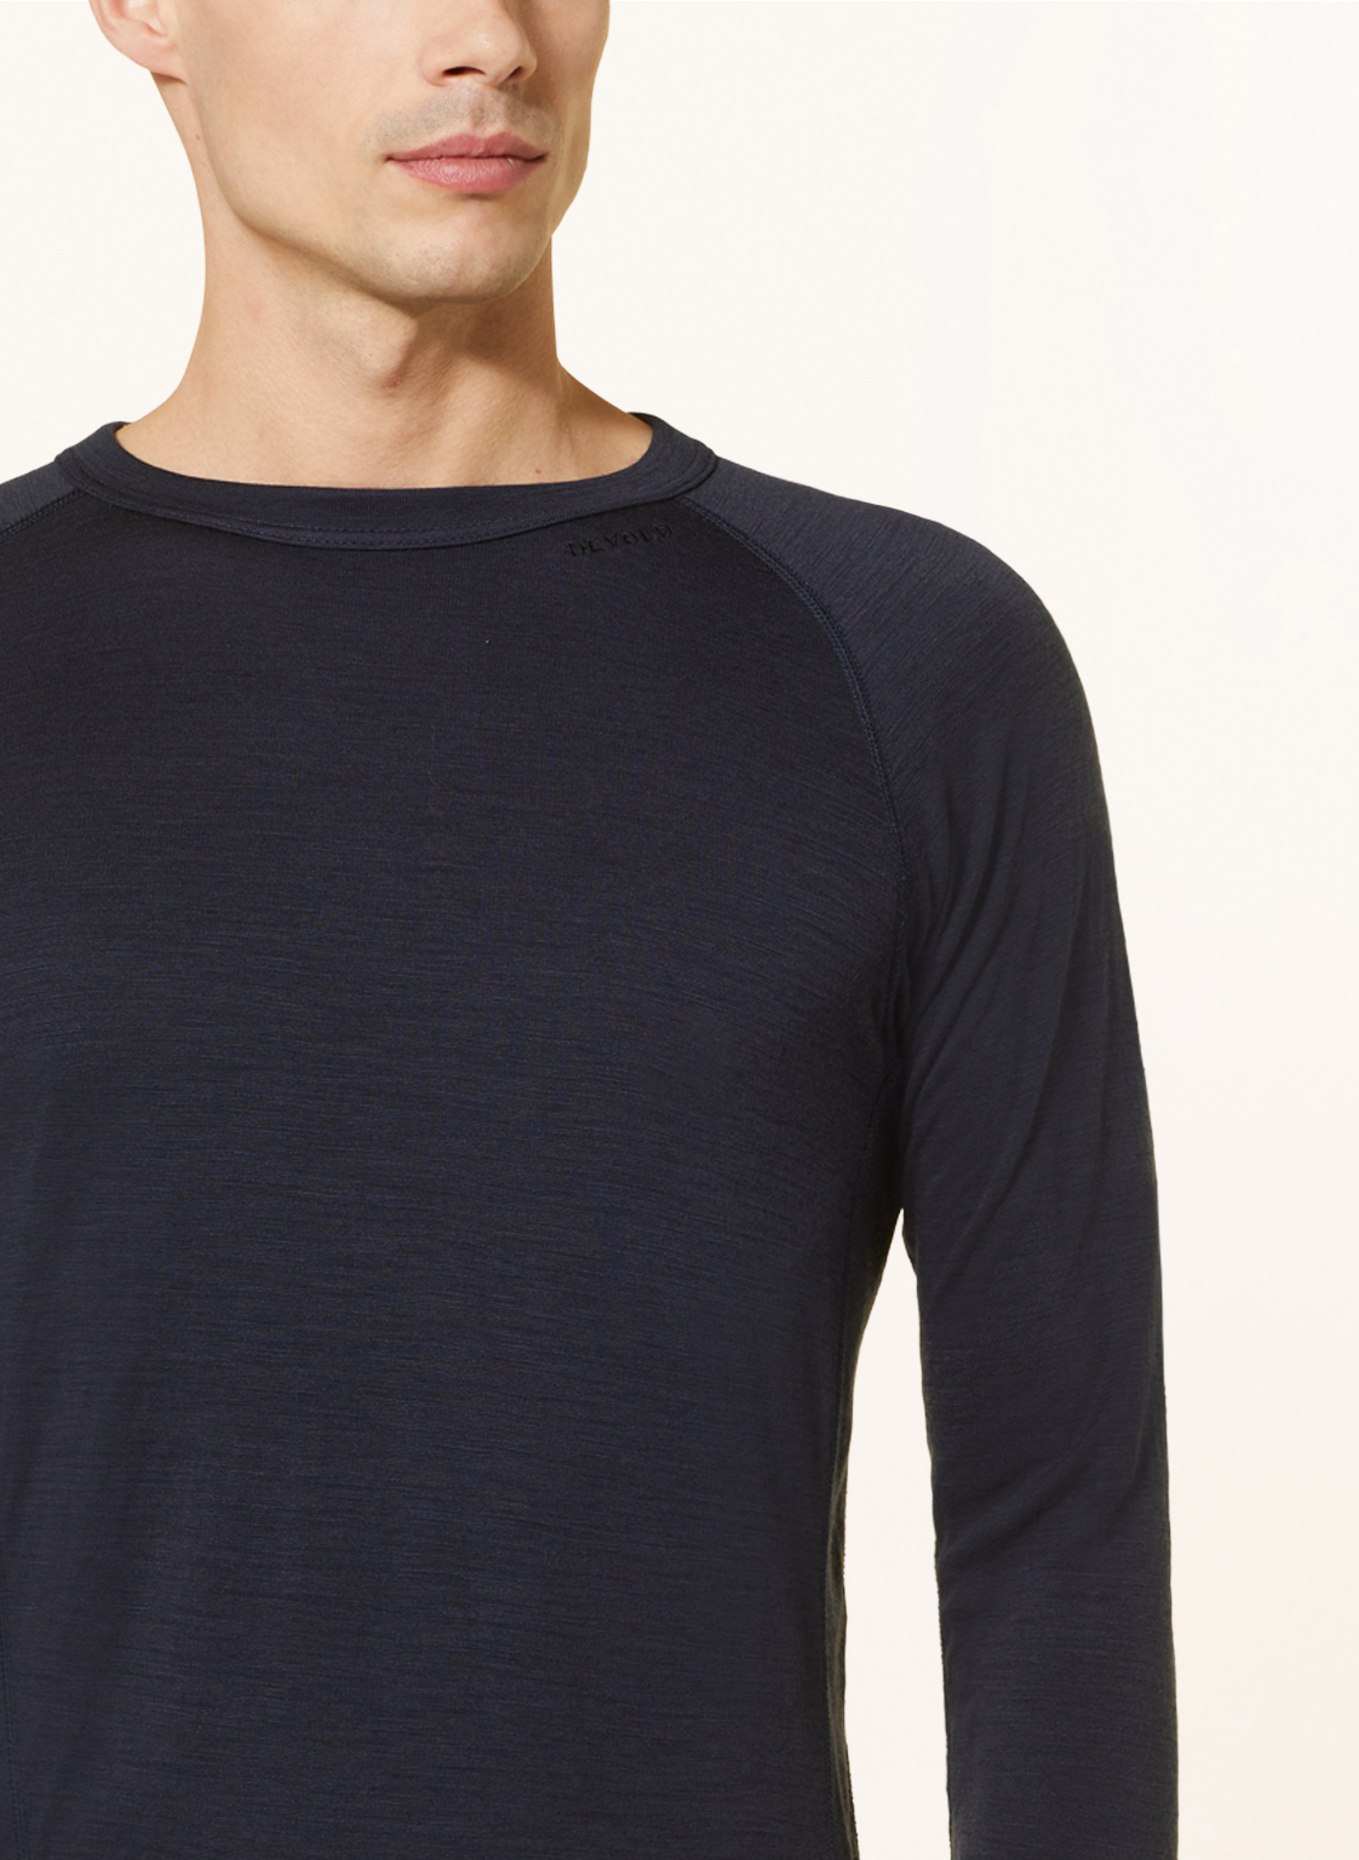 DEVOLD Functional underwear shirt DUO ACTIVE made of merino wool, Color: DARK GRAY (Image 4)